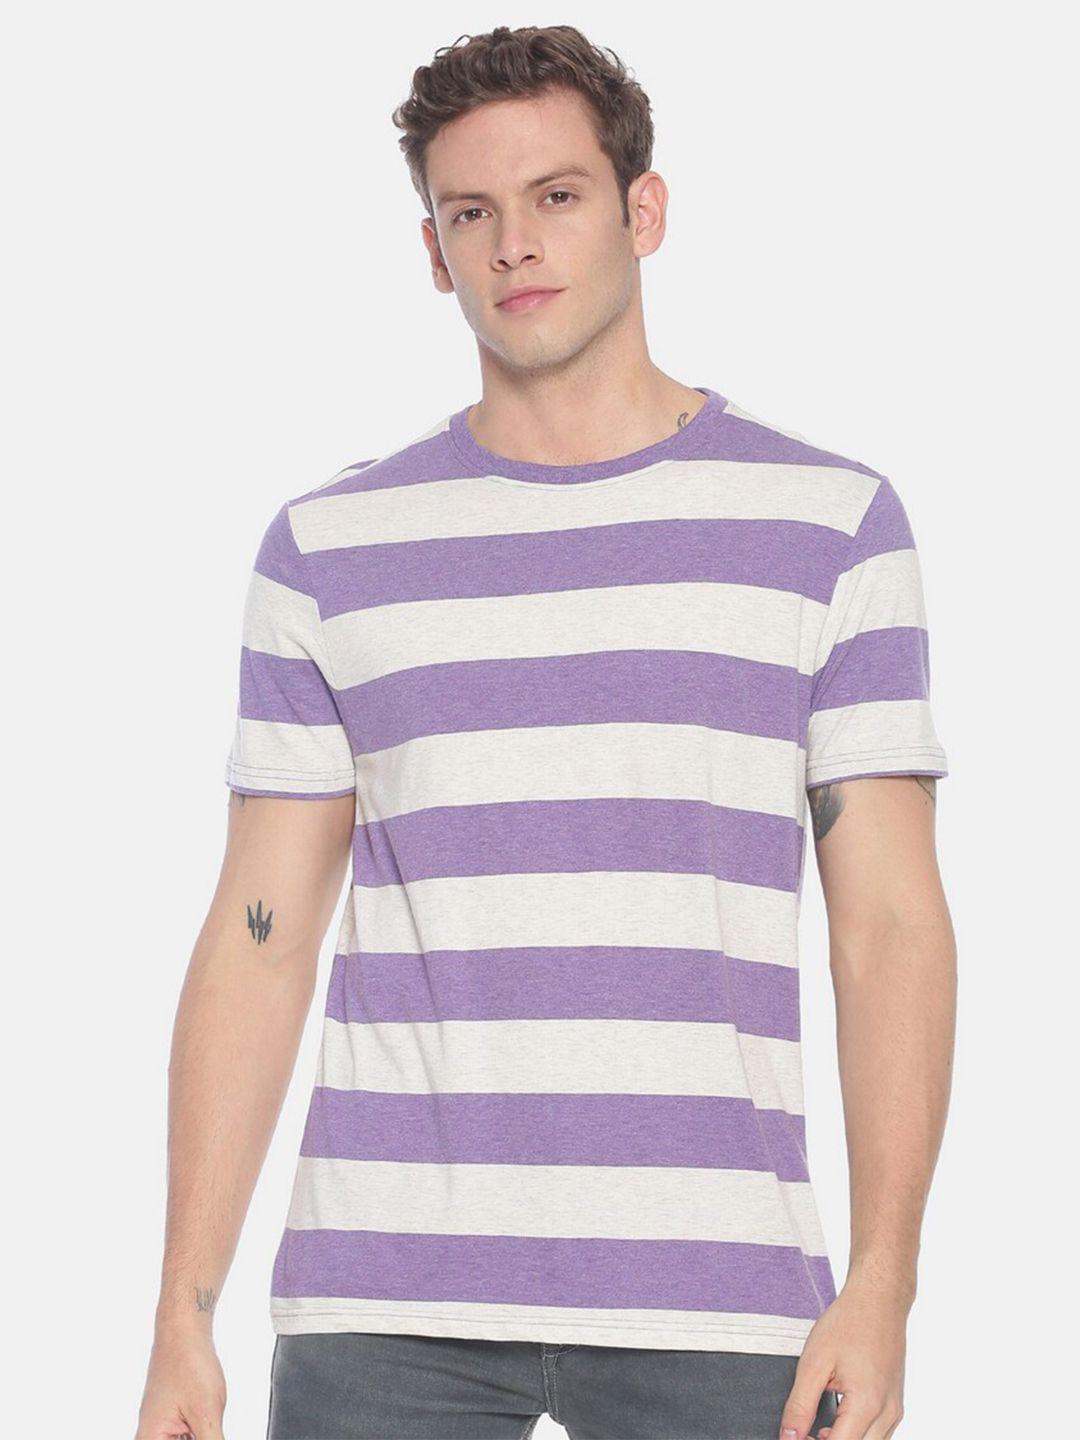 steenbok-men-purple-striped-cotton-t-shirt